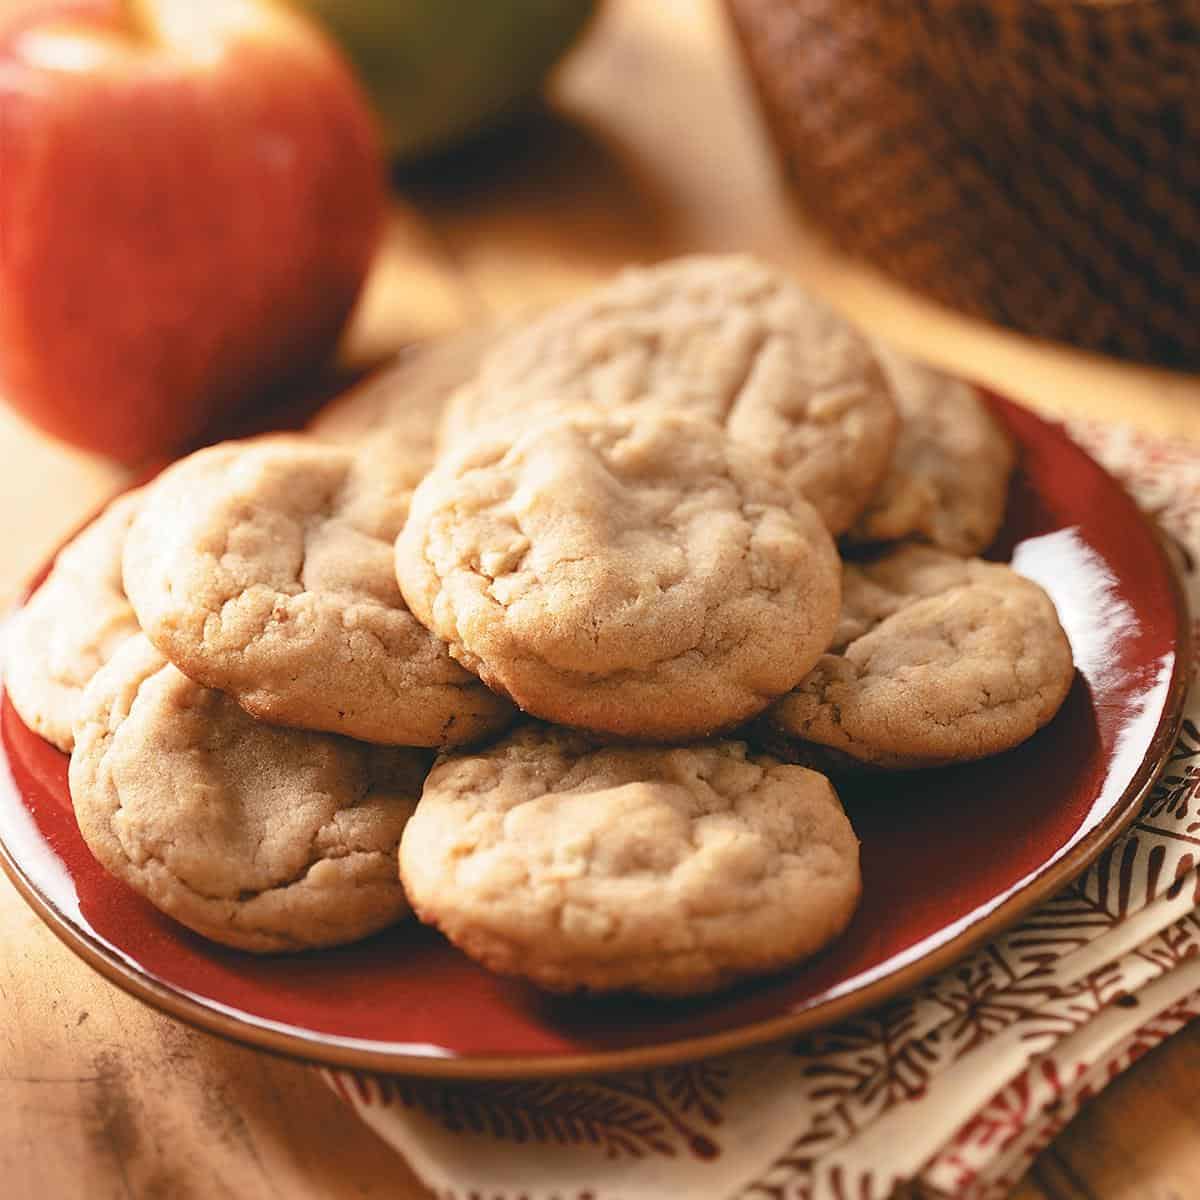 Apple peanut butter cookies